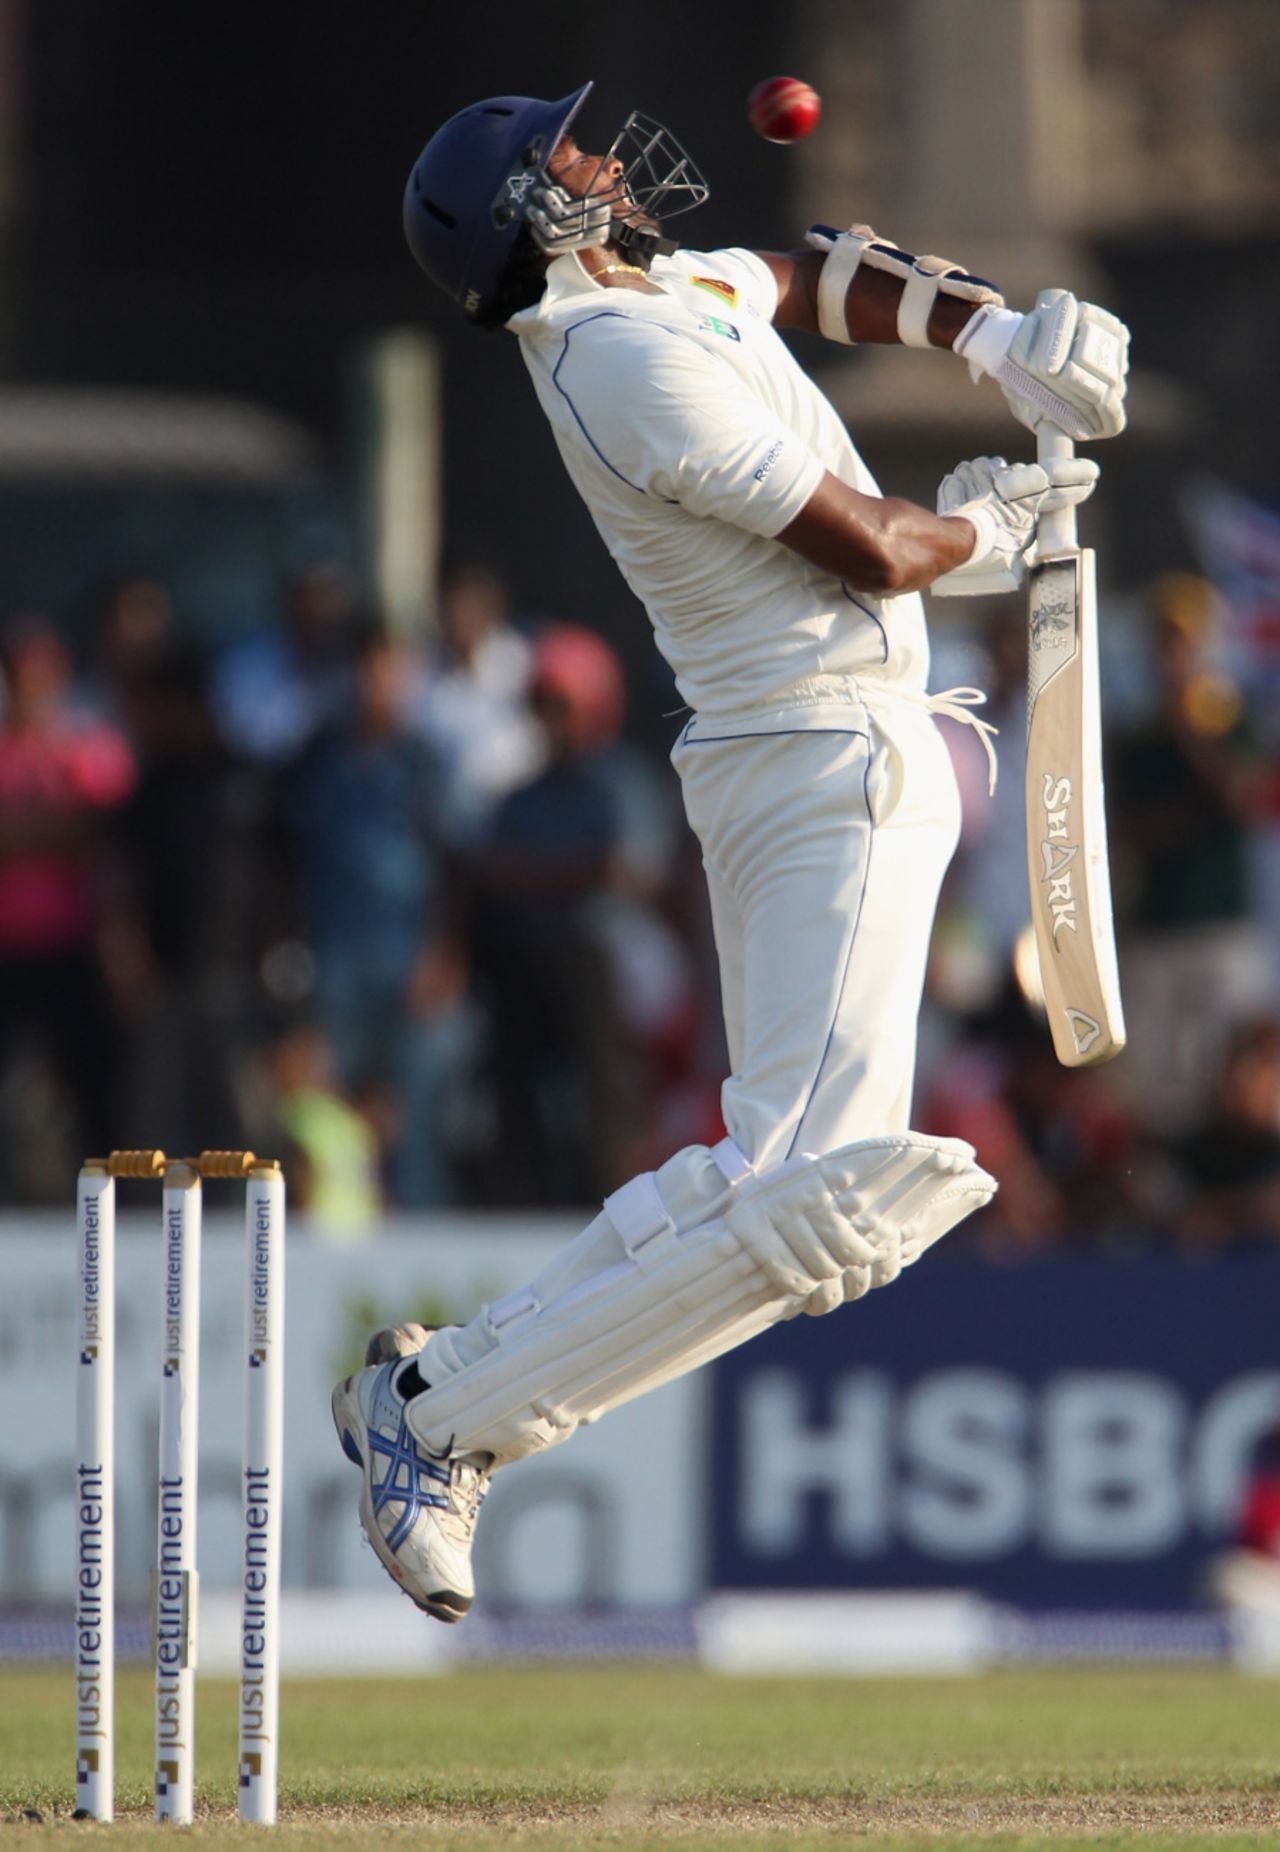 Chanaka Welegedara avoids a bouncer, Sri Lanka v England, 1st Test, Galle, 1st day, March 26, 2012